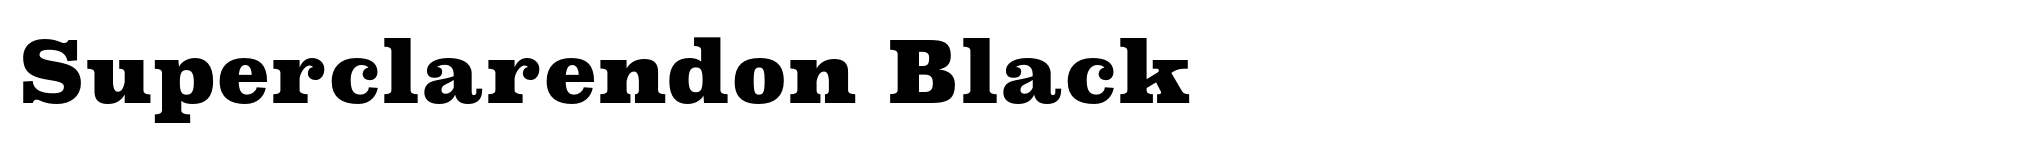 Superclarendon Black image